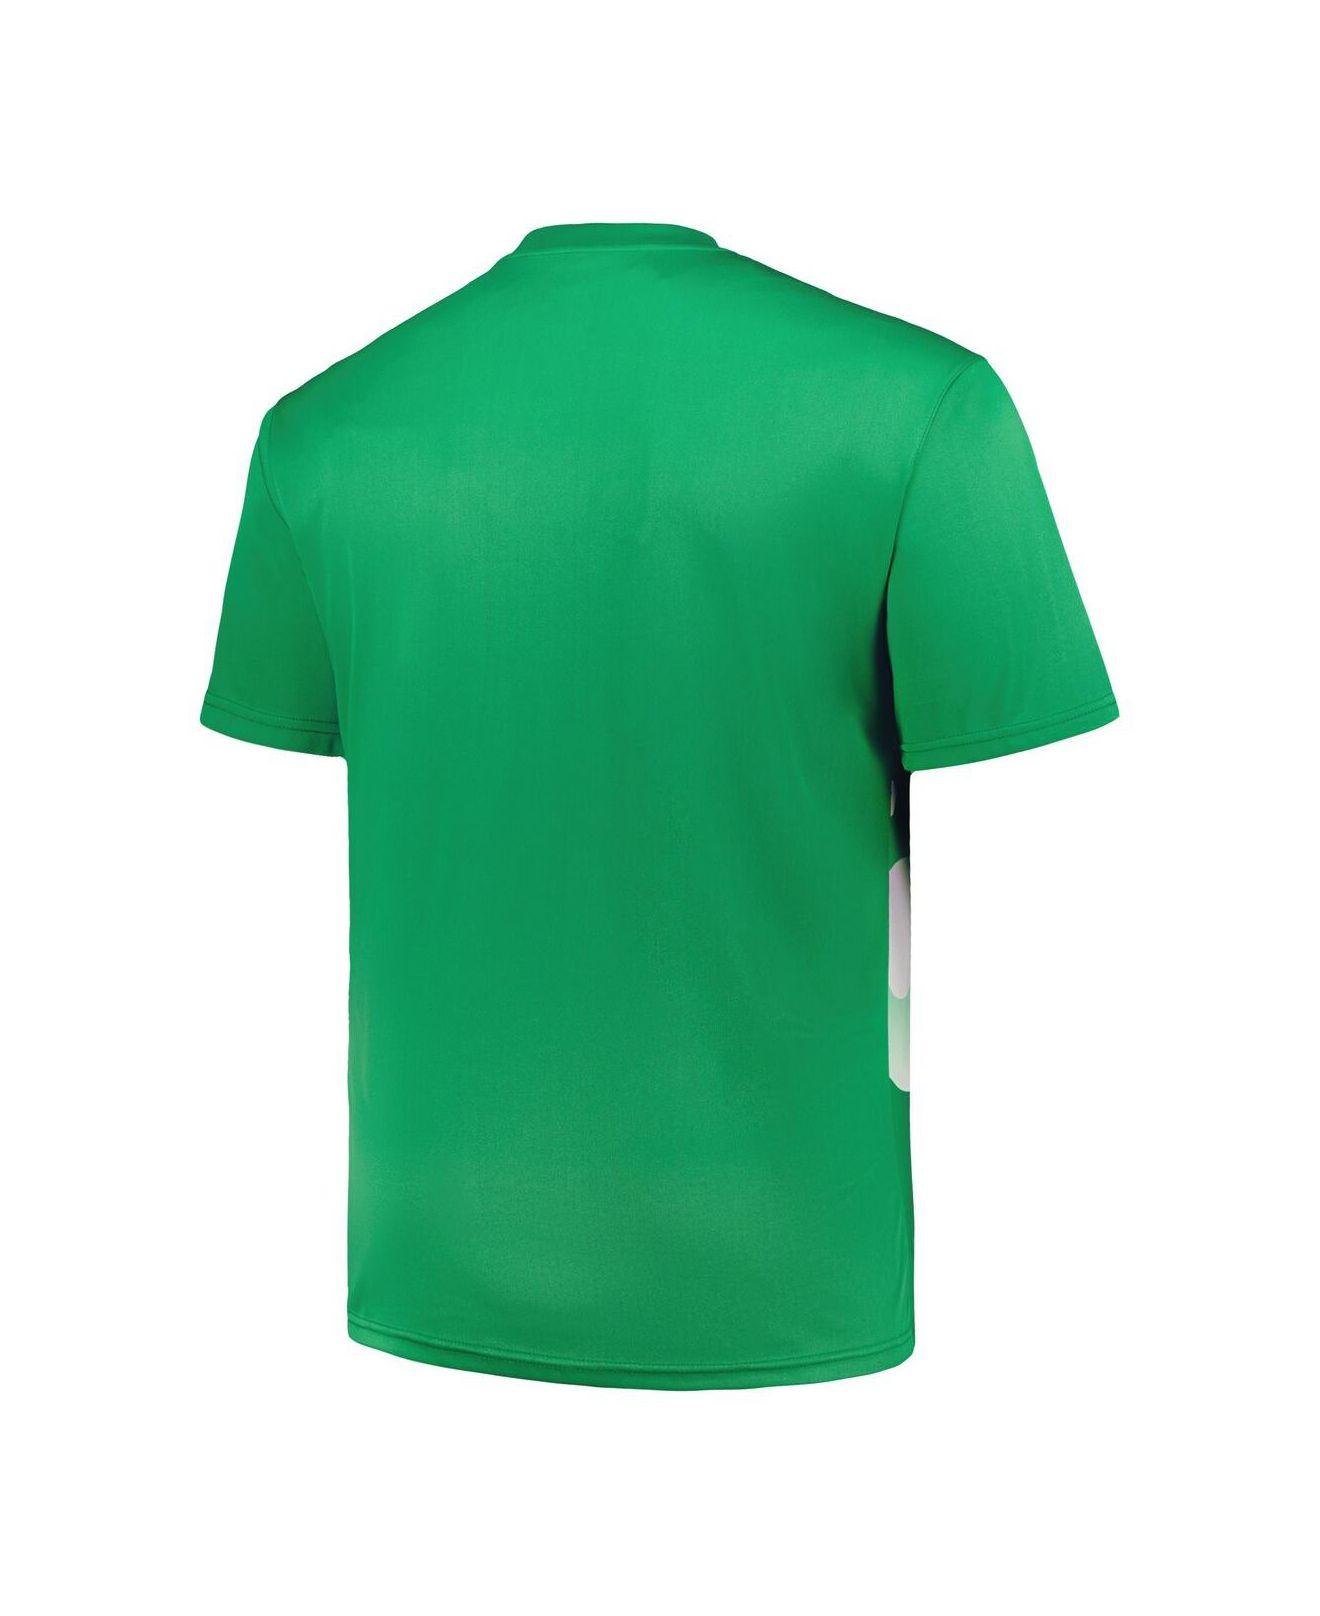 Men's Kelly Green Boston Celtics Big & Tall Sublimated T-Shirt